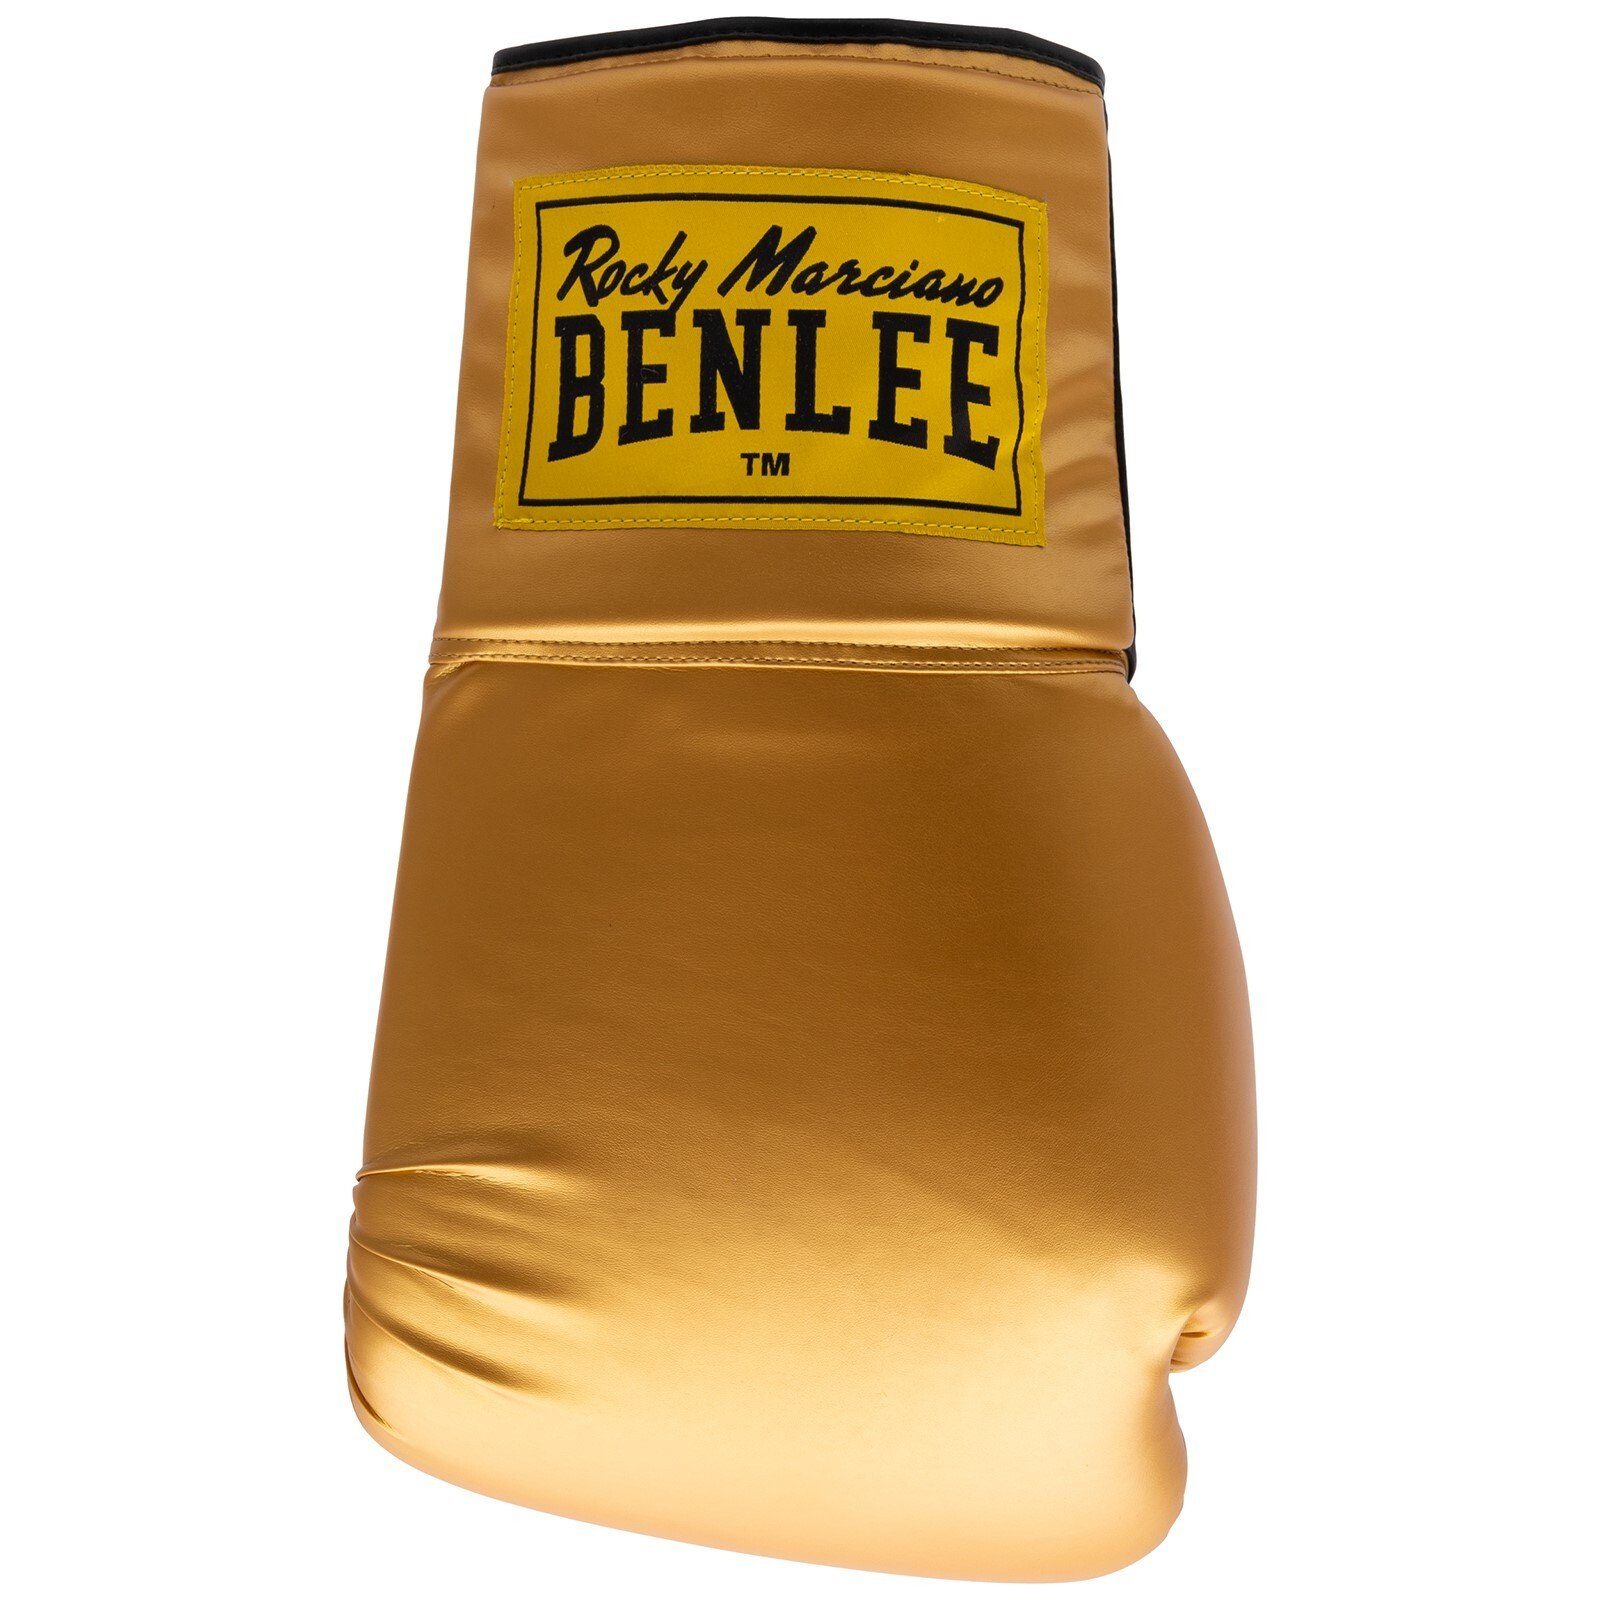 GIANT Marciano Boxhandschuhe Benlee Gold Rocky BENLEE